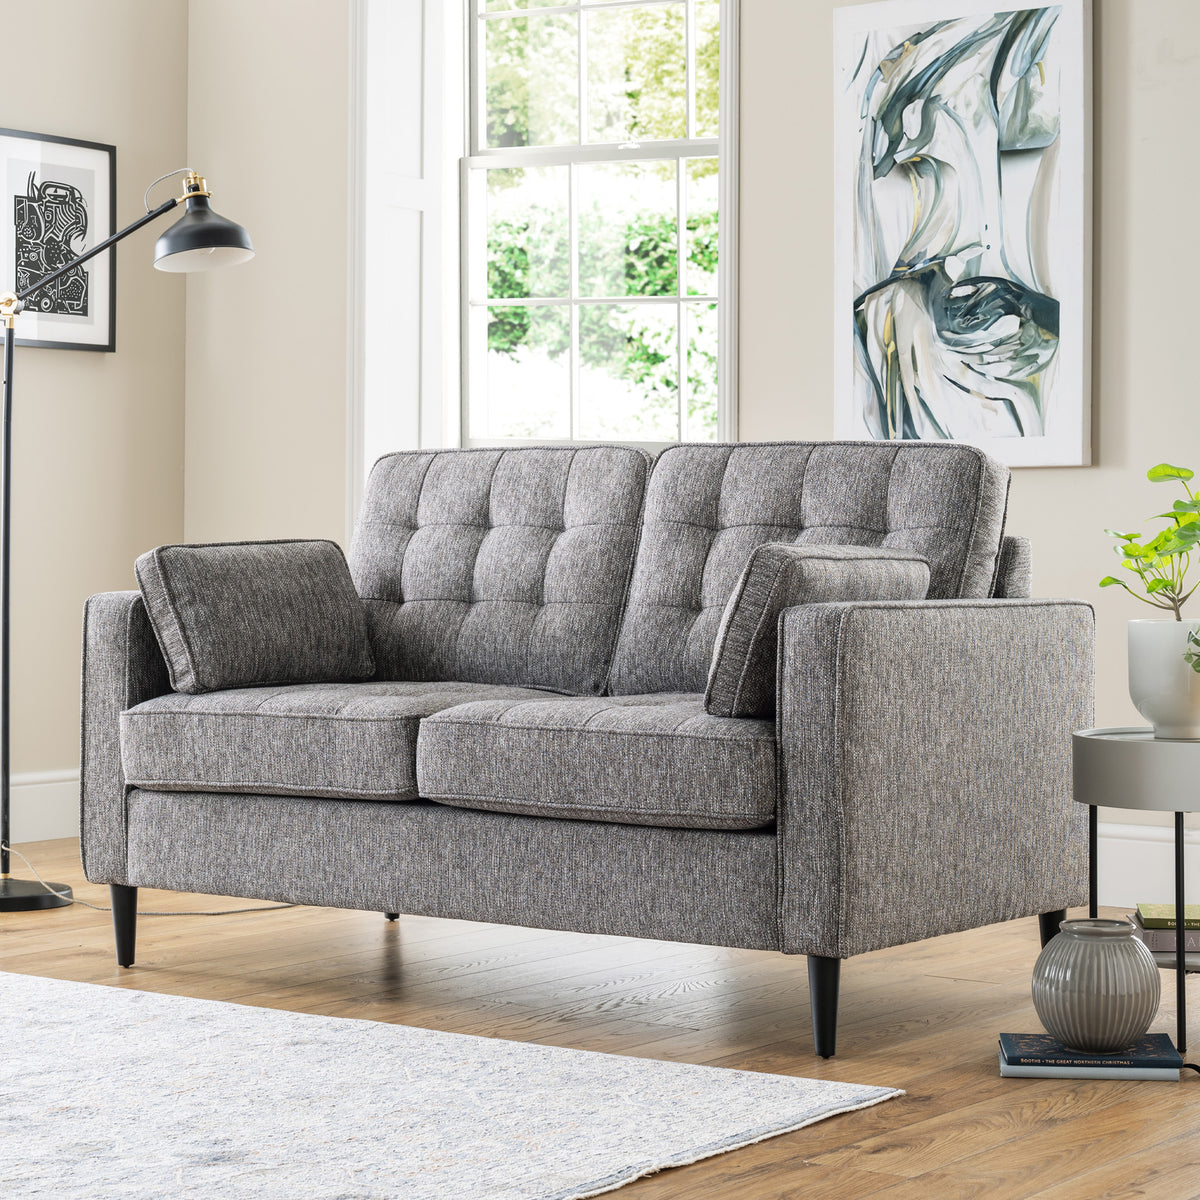 Blake Grey 2 Seater Sofa for living room